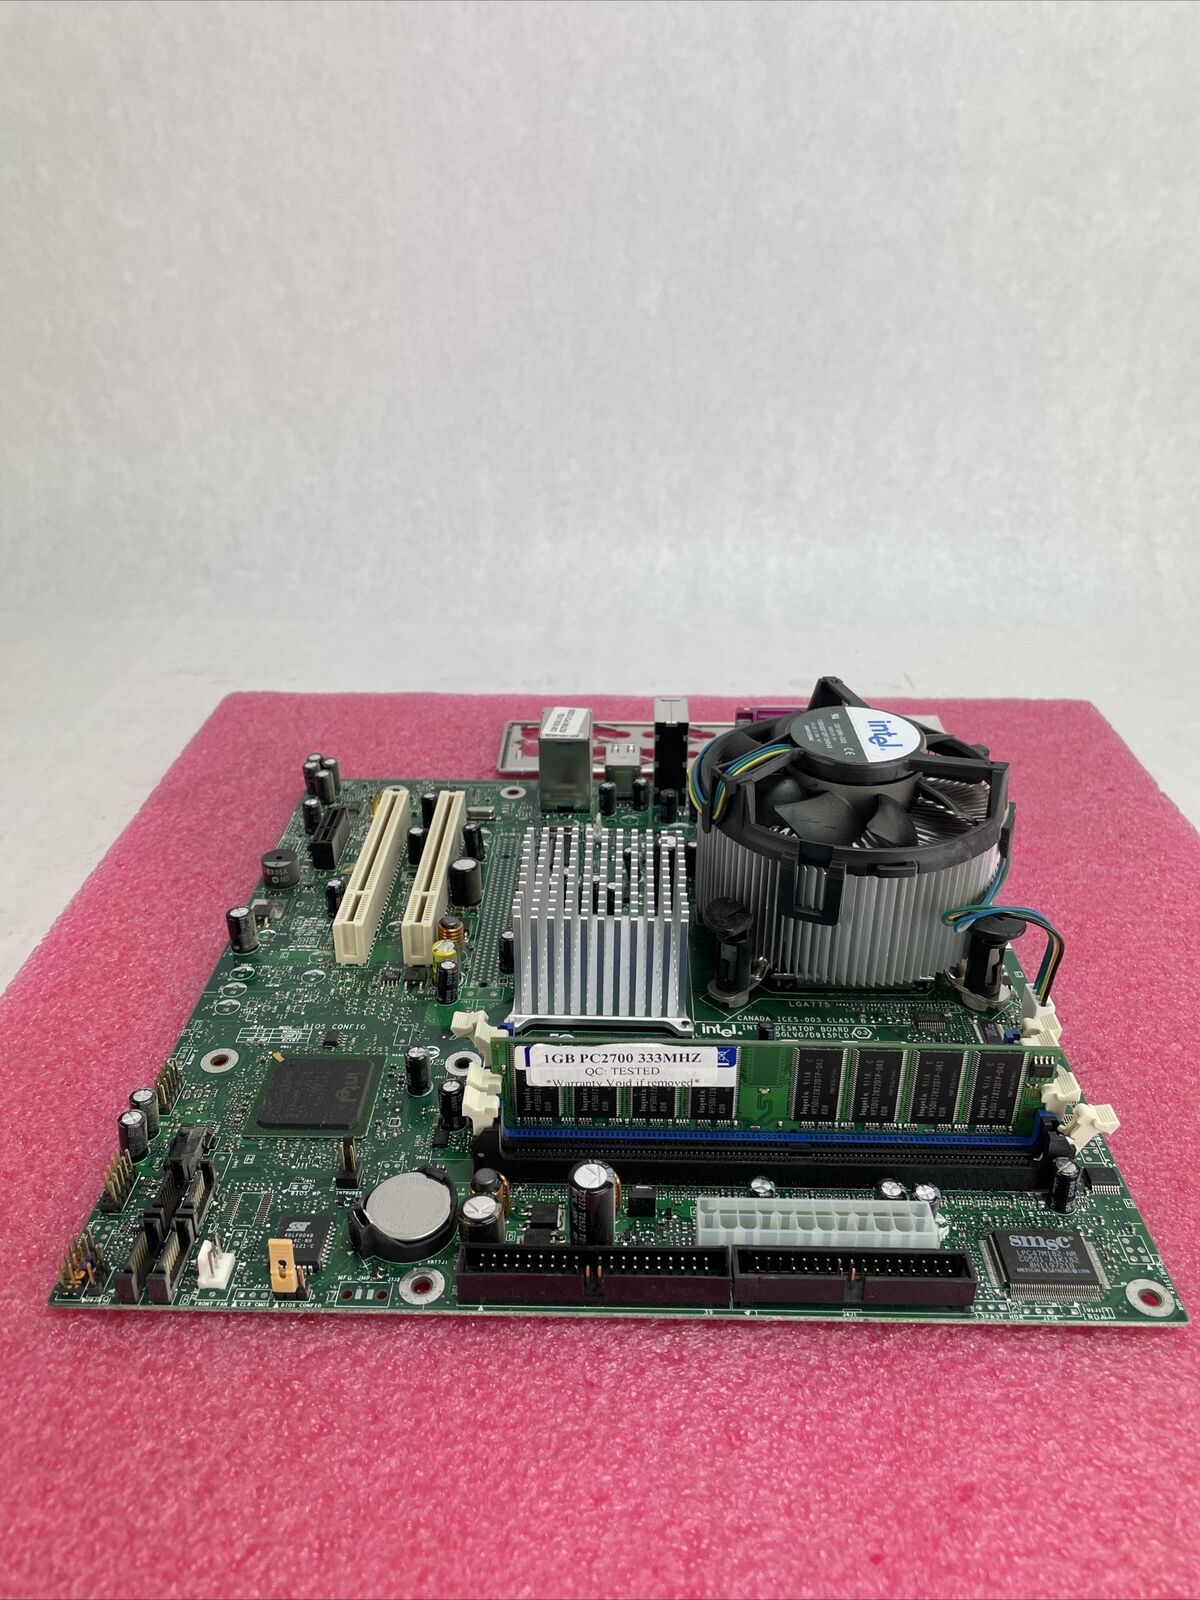 Intel D915GLVG Motherboard Intel Pentium 4 2.66GHz 1GB RAM w/Shield